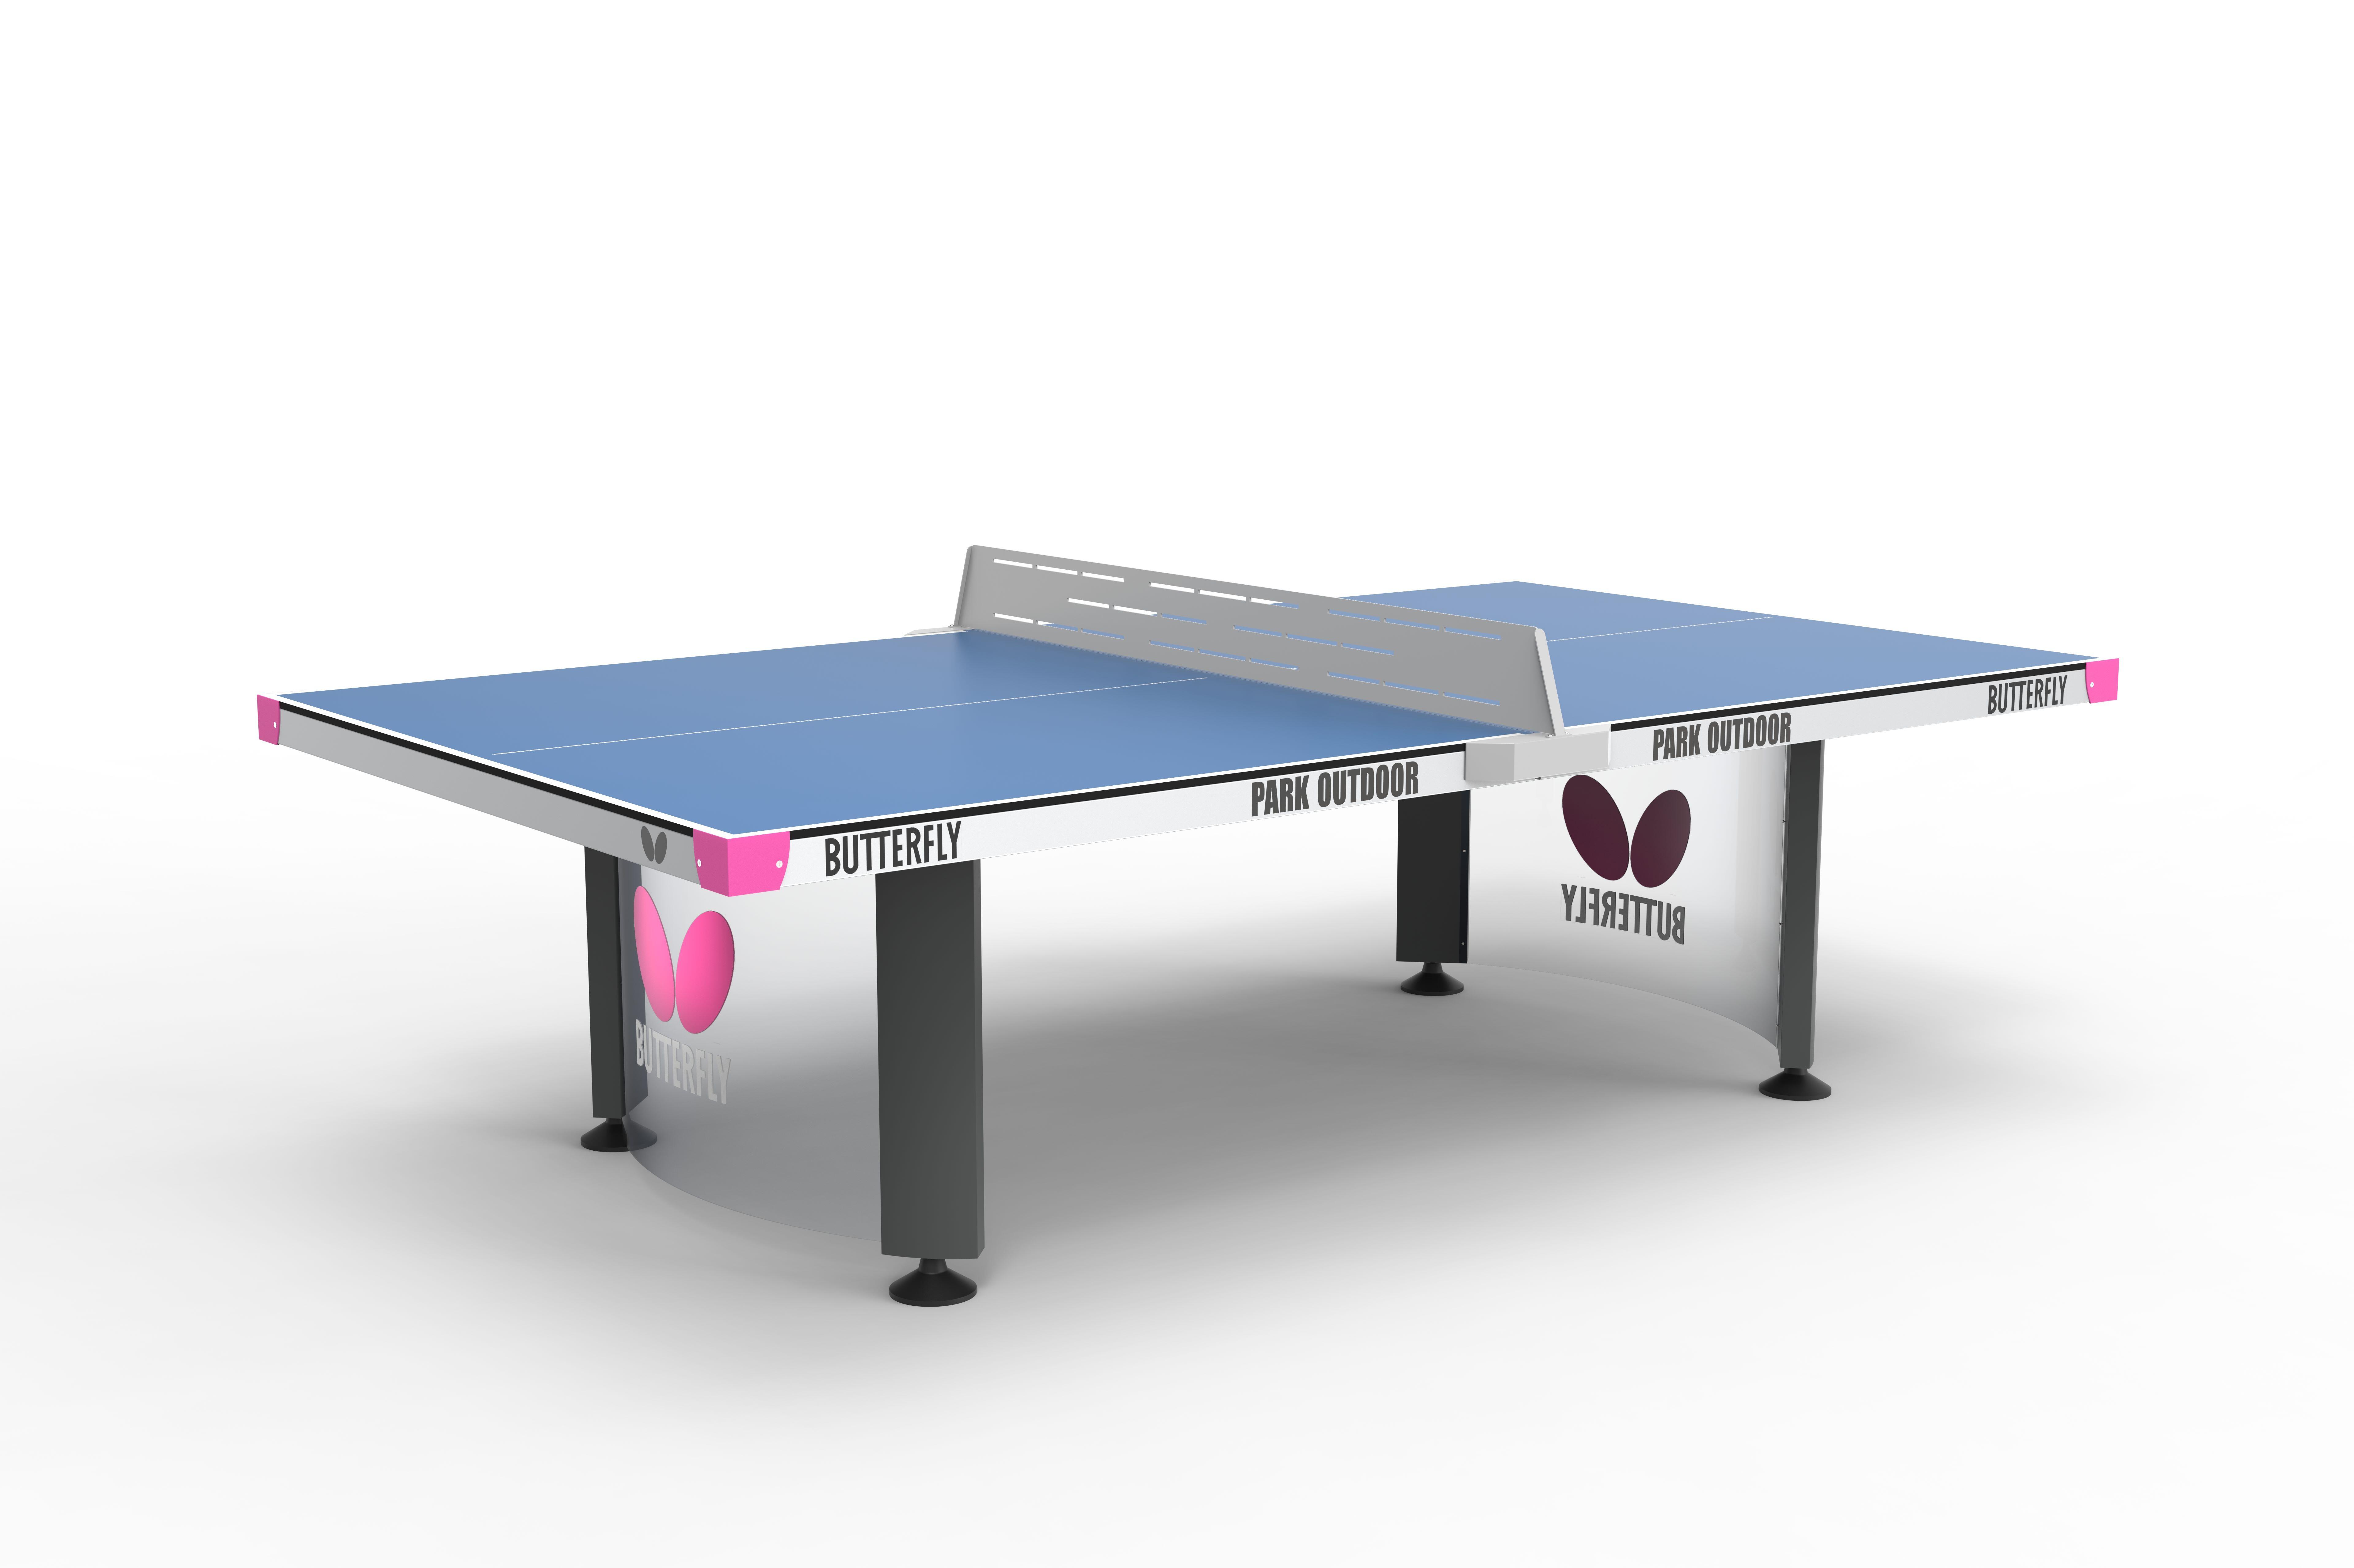 Park & Sun Mini Table Tennis Table for sale online